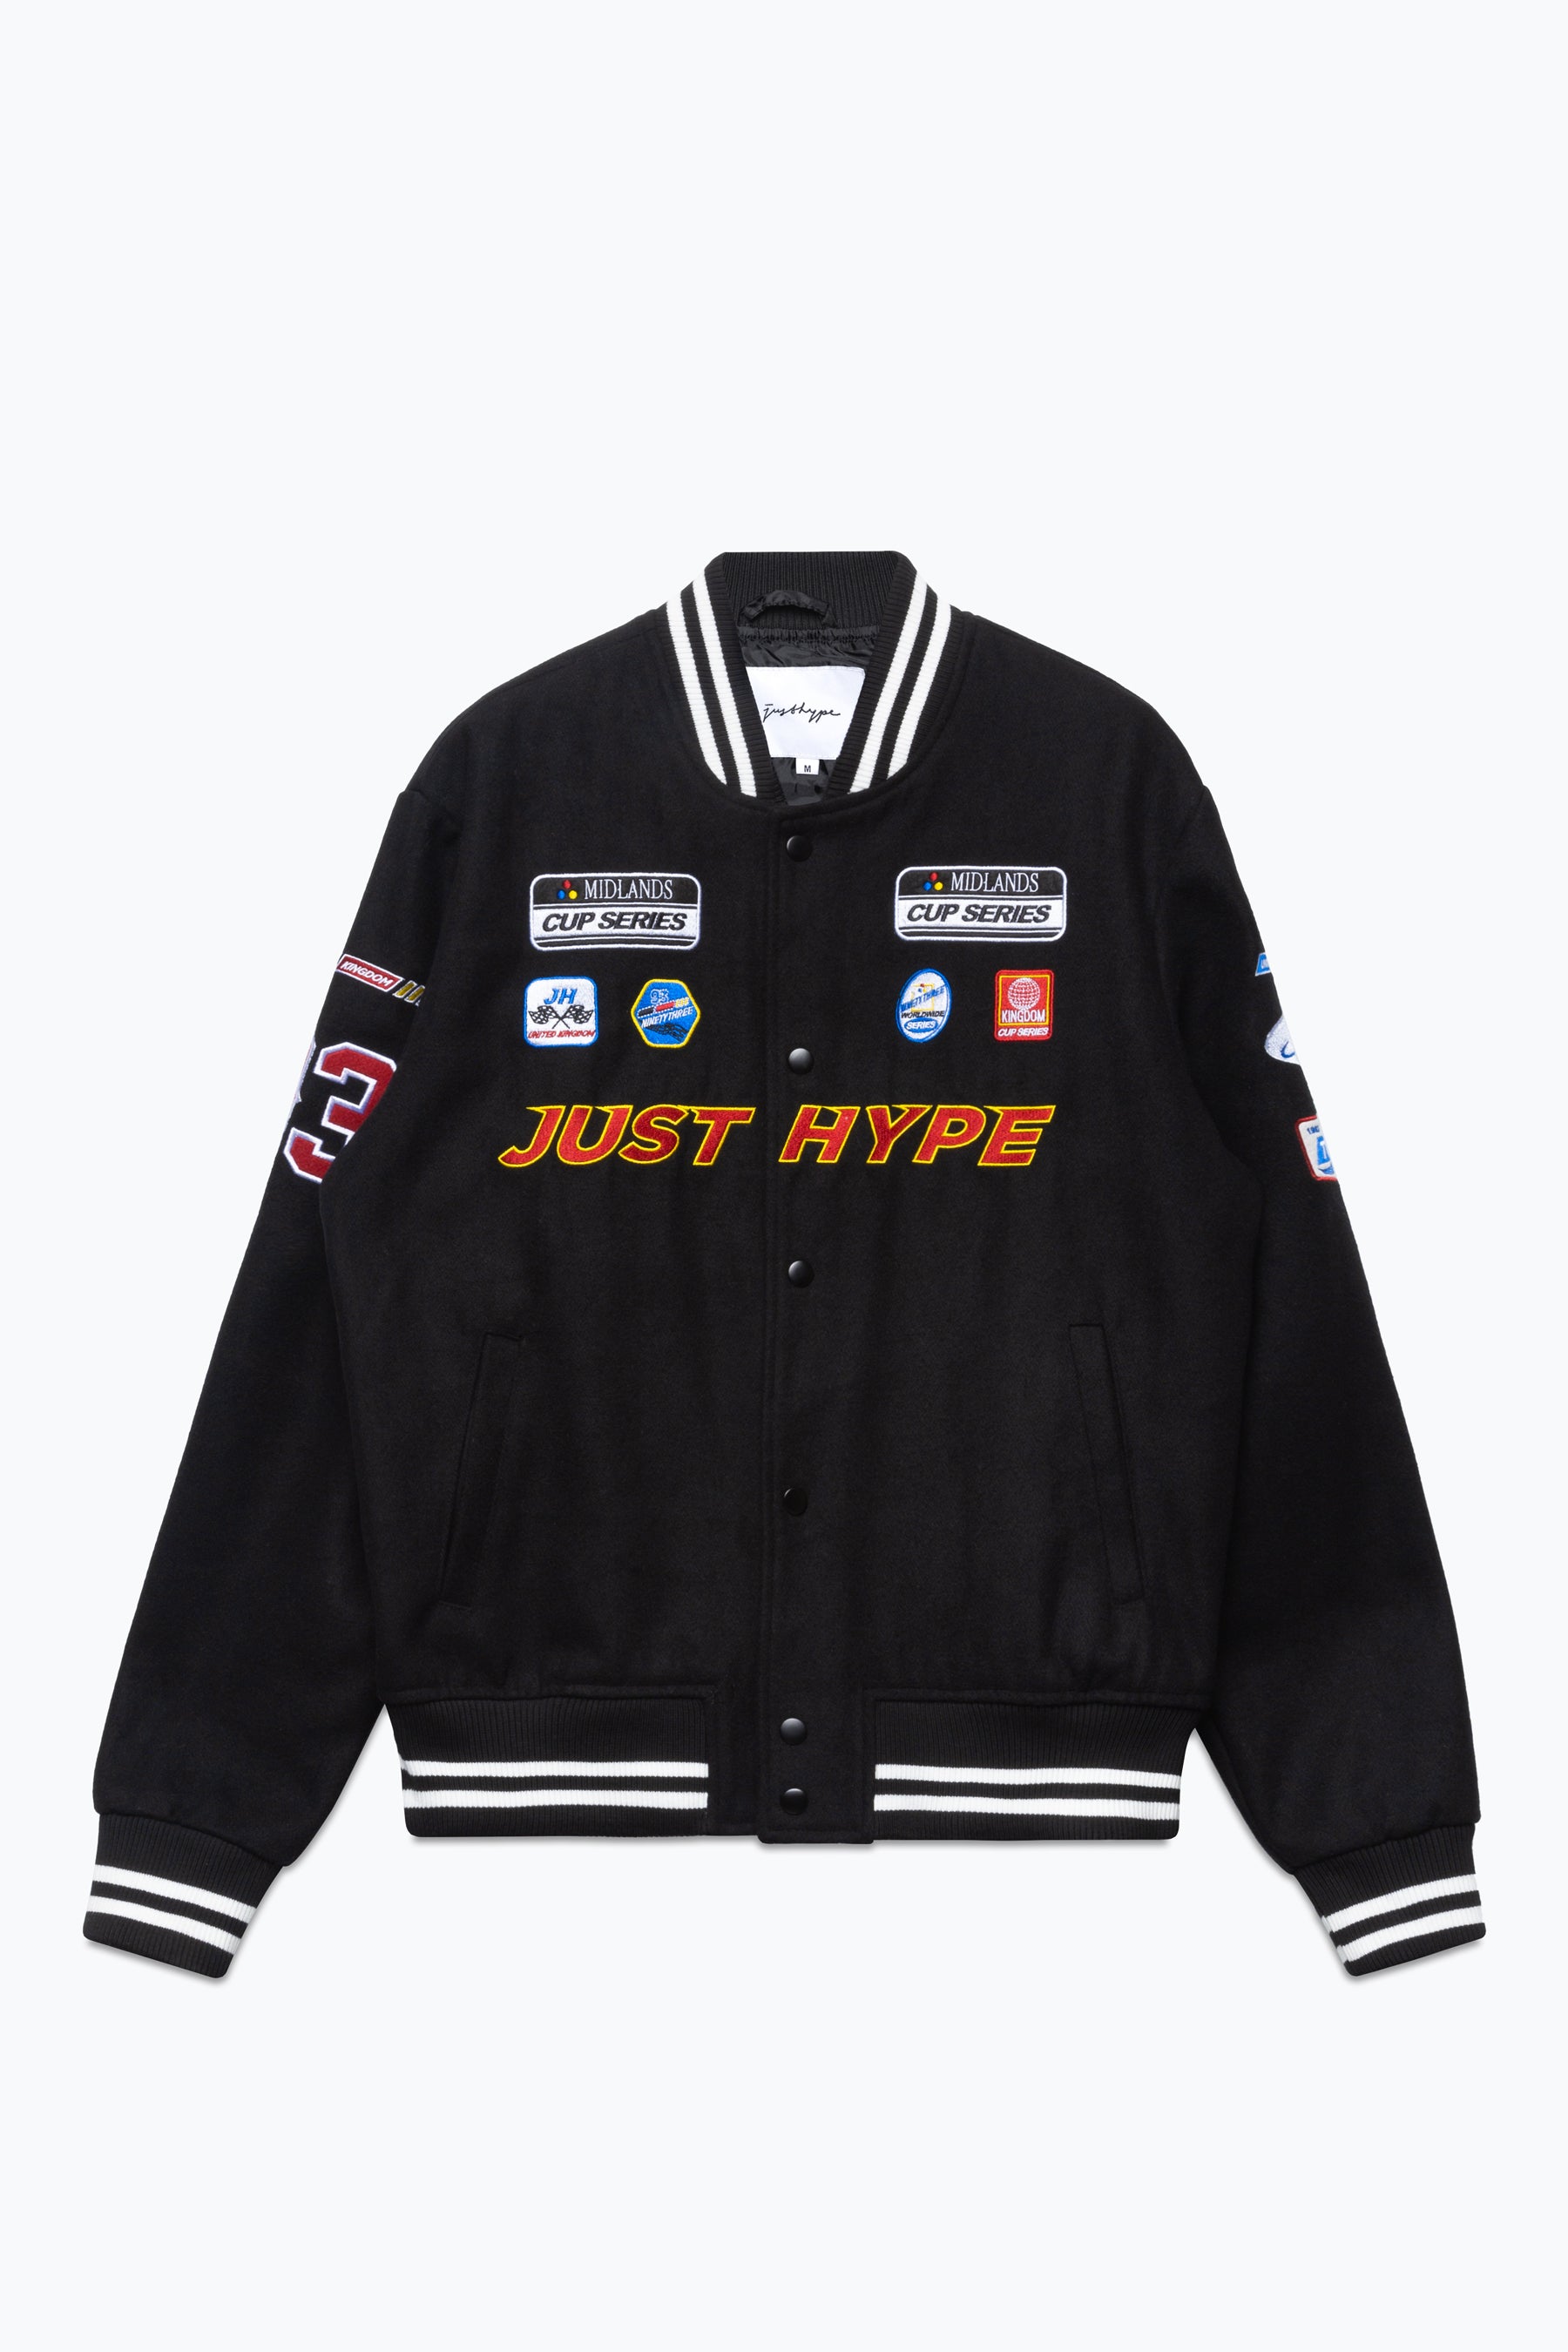 hype mens black jh racer badge jacket